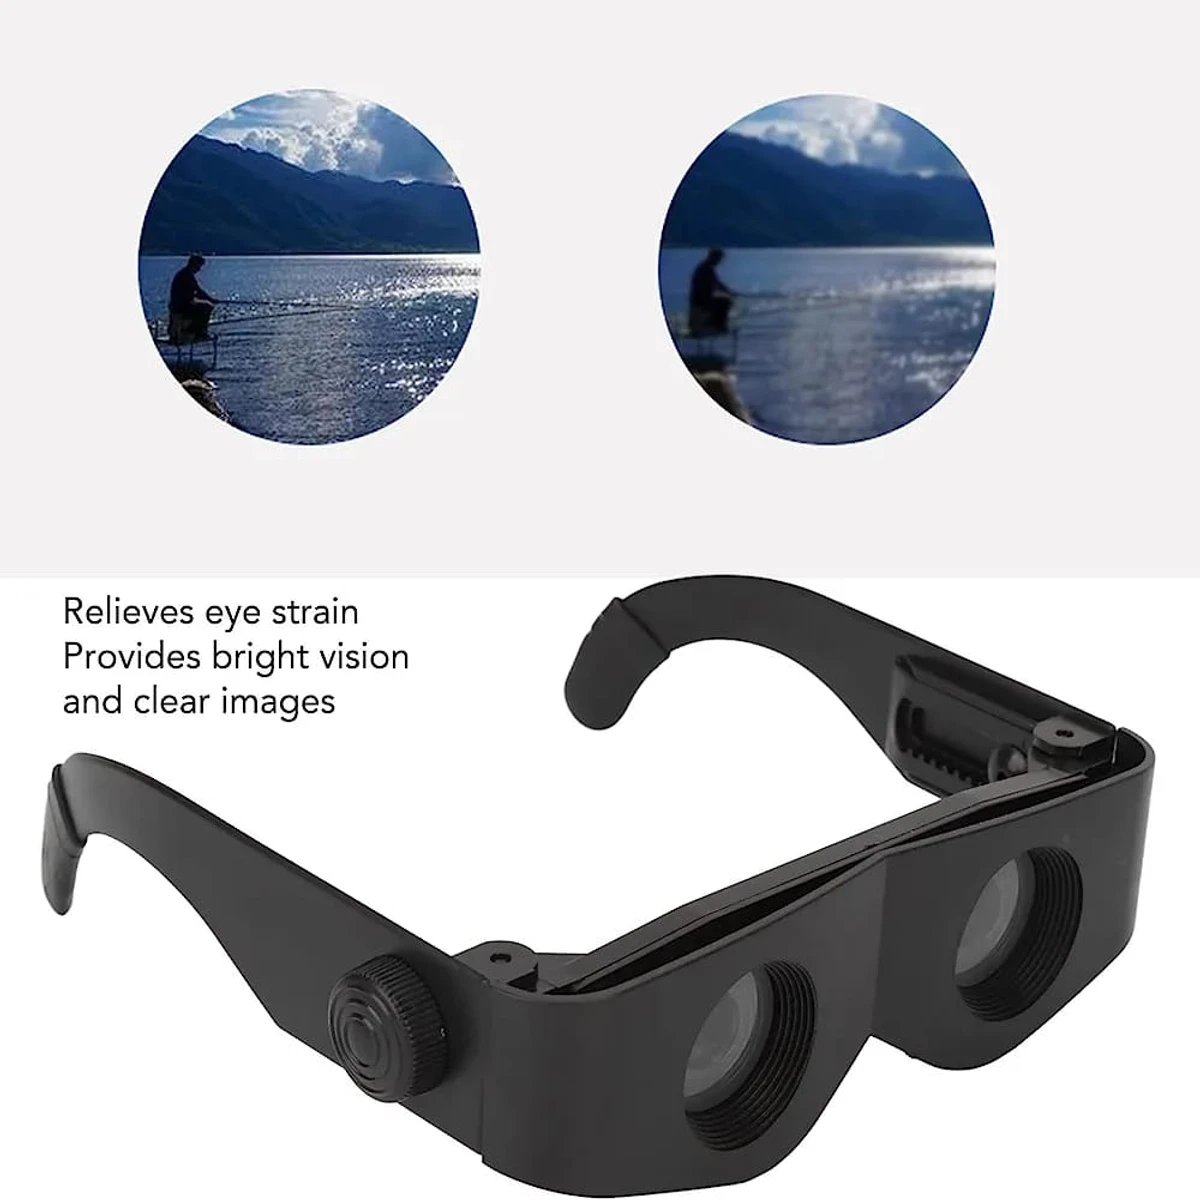 Zoomies Hands Free - 400% Magnification Binoculars Multifunctional Glasses